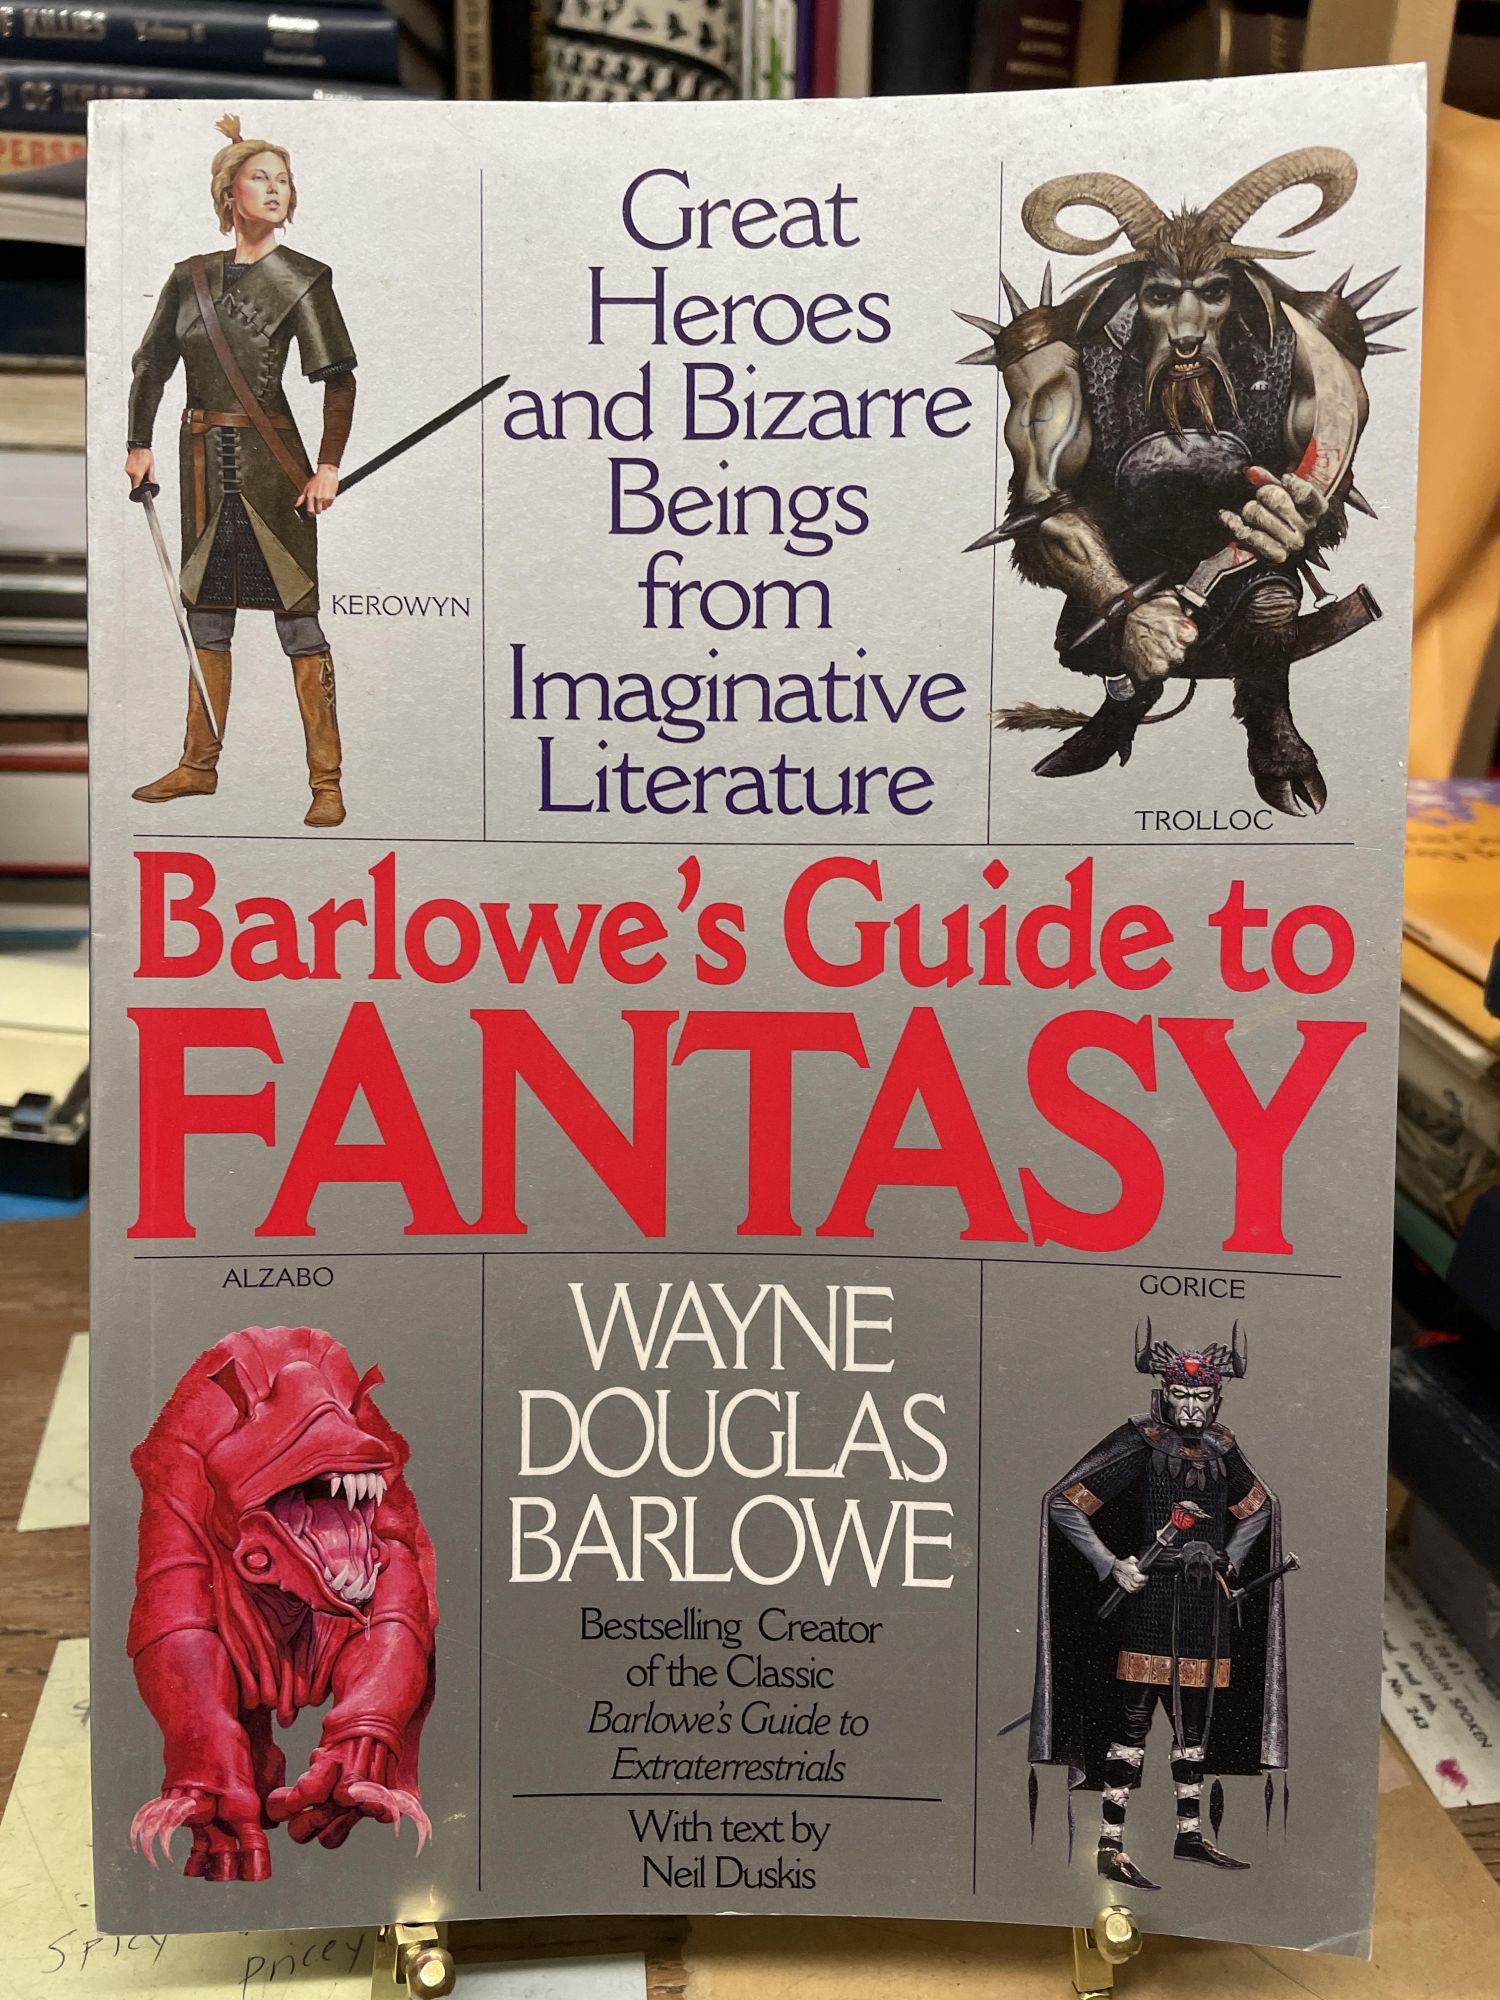 Barlowe's Guide to Fantasy by Wayne Douglas Barlowe on Chamblin Bookmine